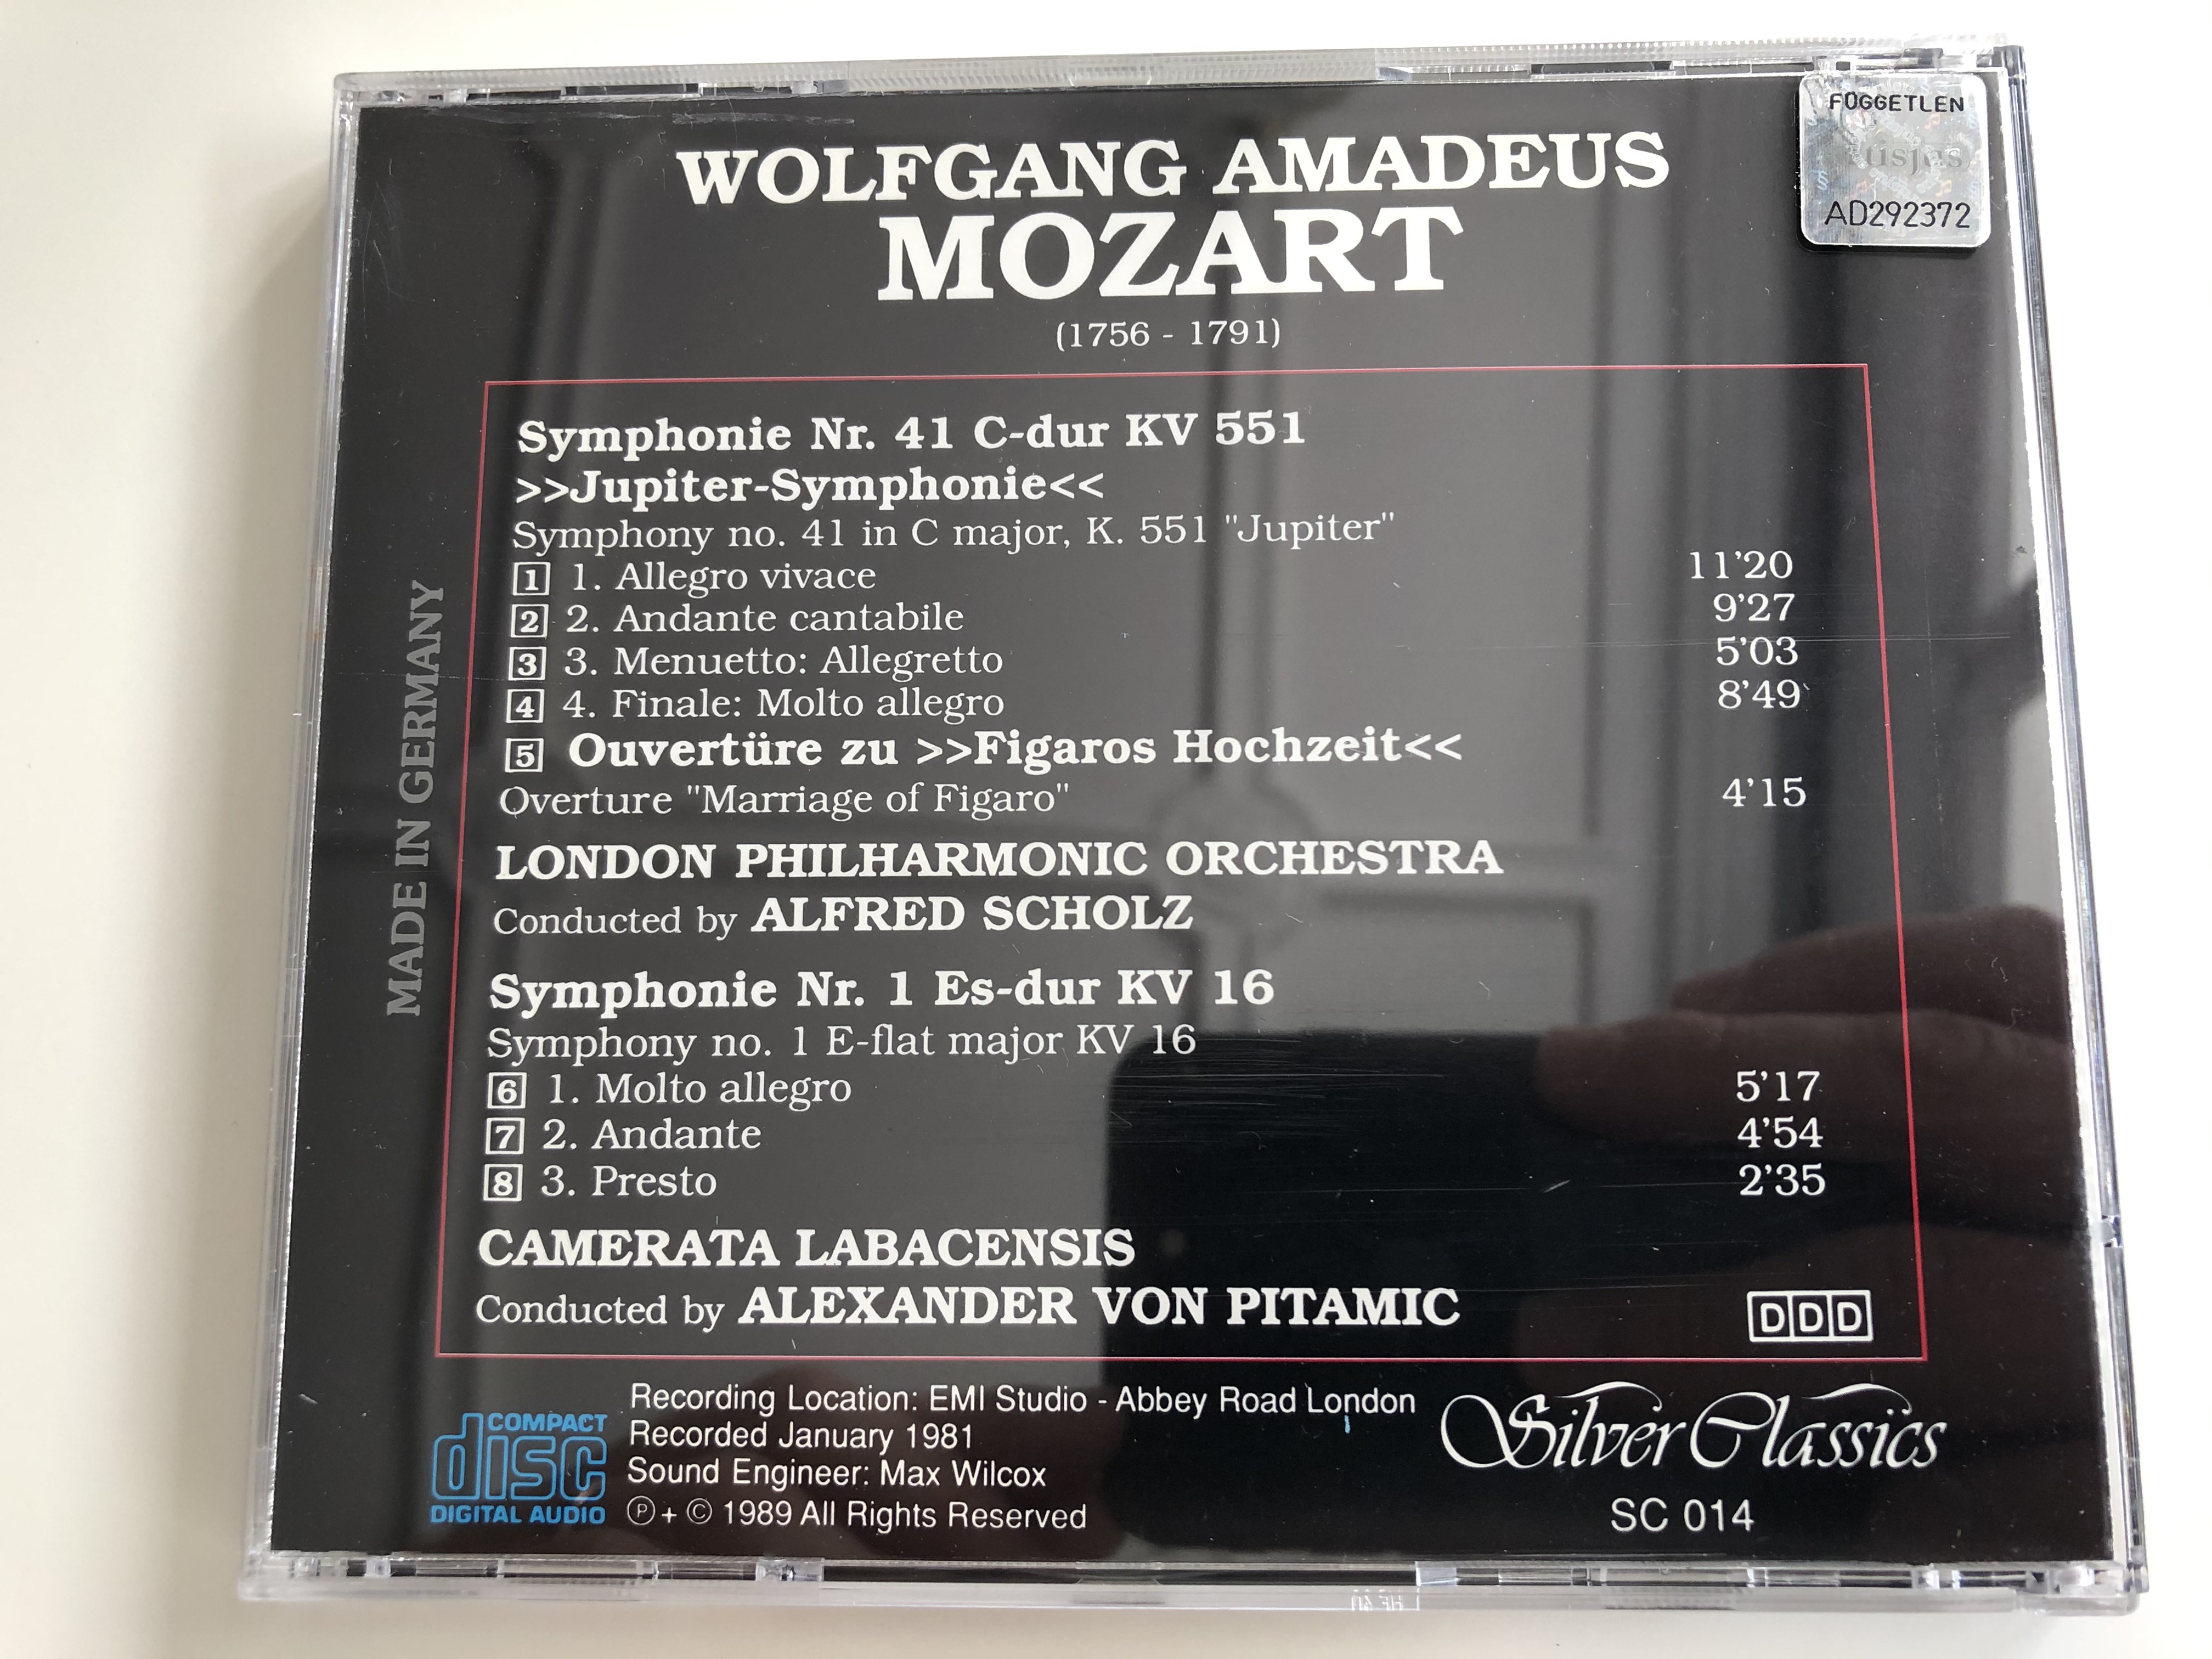 silver-classics-wolfgang-amadeus-mozart-symphonie-nr.-41-c-dur-kv-551-jupiter-symphonie-ouverture-zu-figaros-hochzeit-london-philharmonic-orchestra-symphonie-nr.-1-es-dur-kv-16-camerata-l-4-.jpg